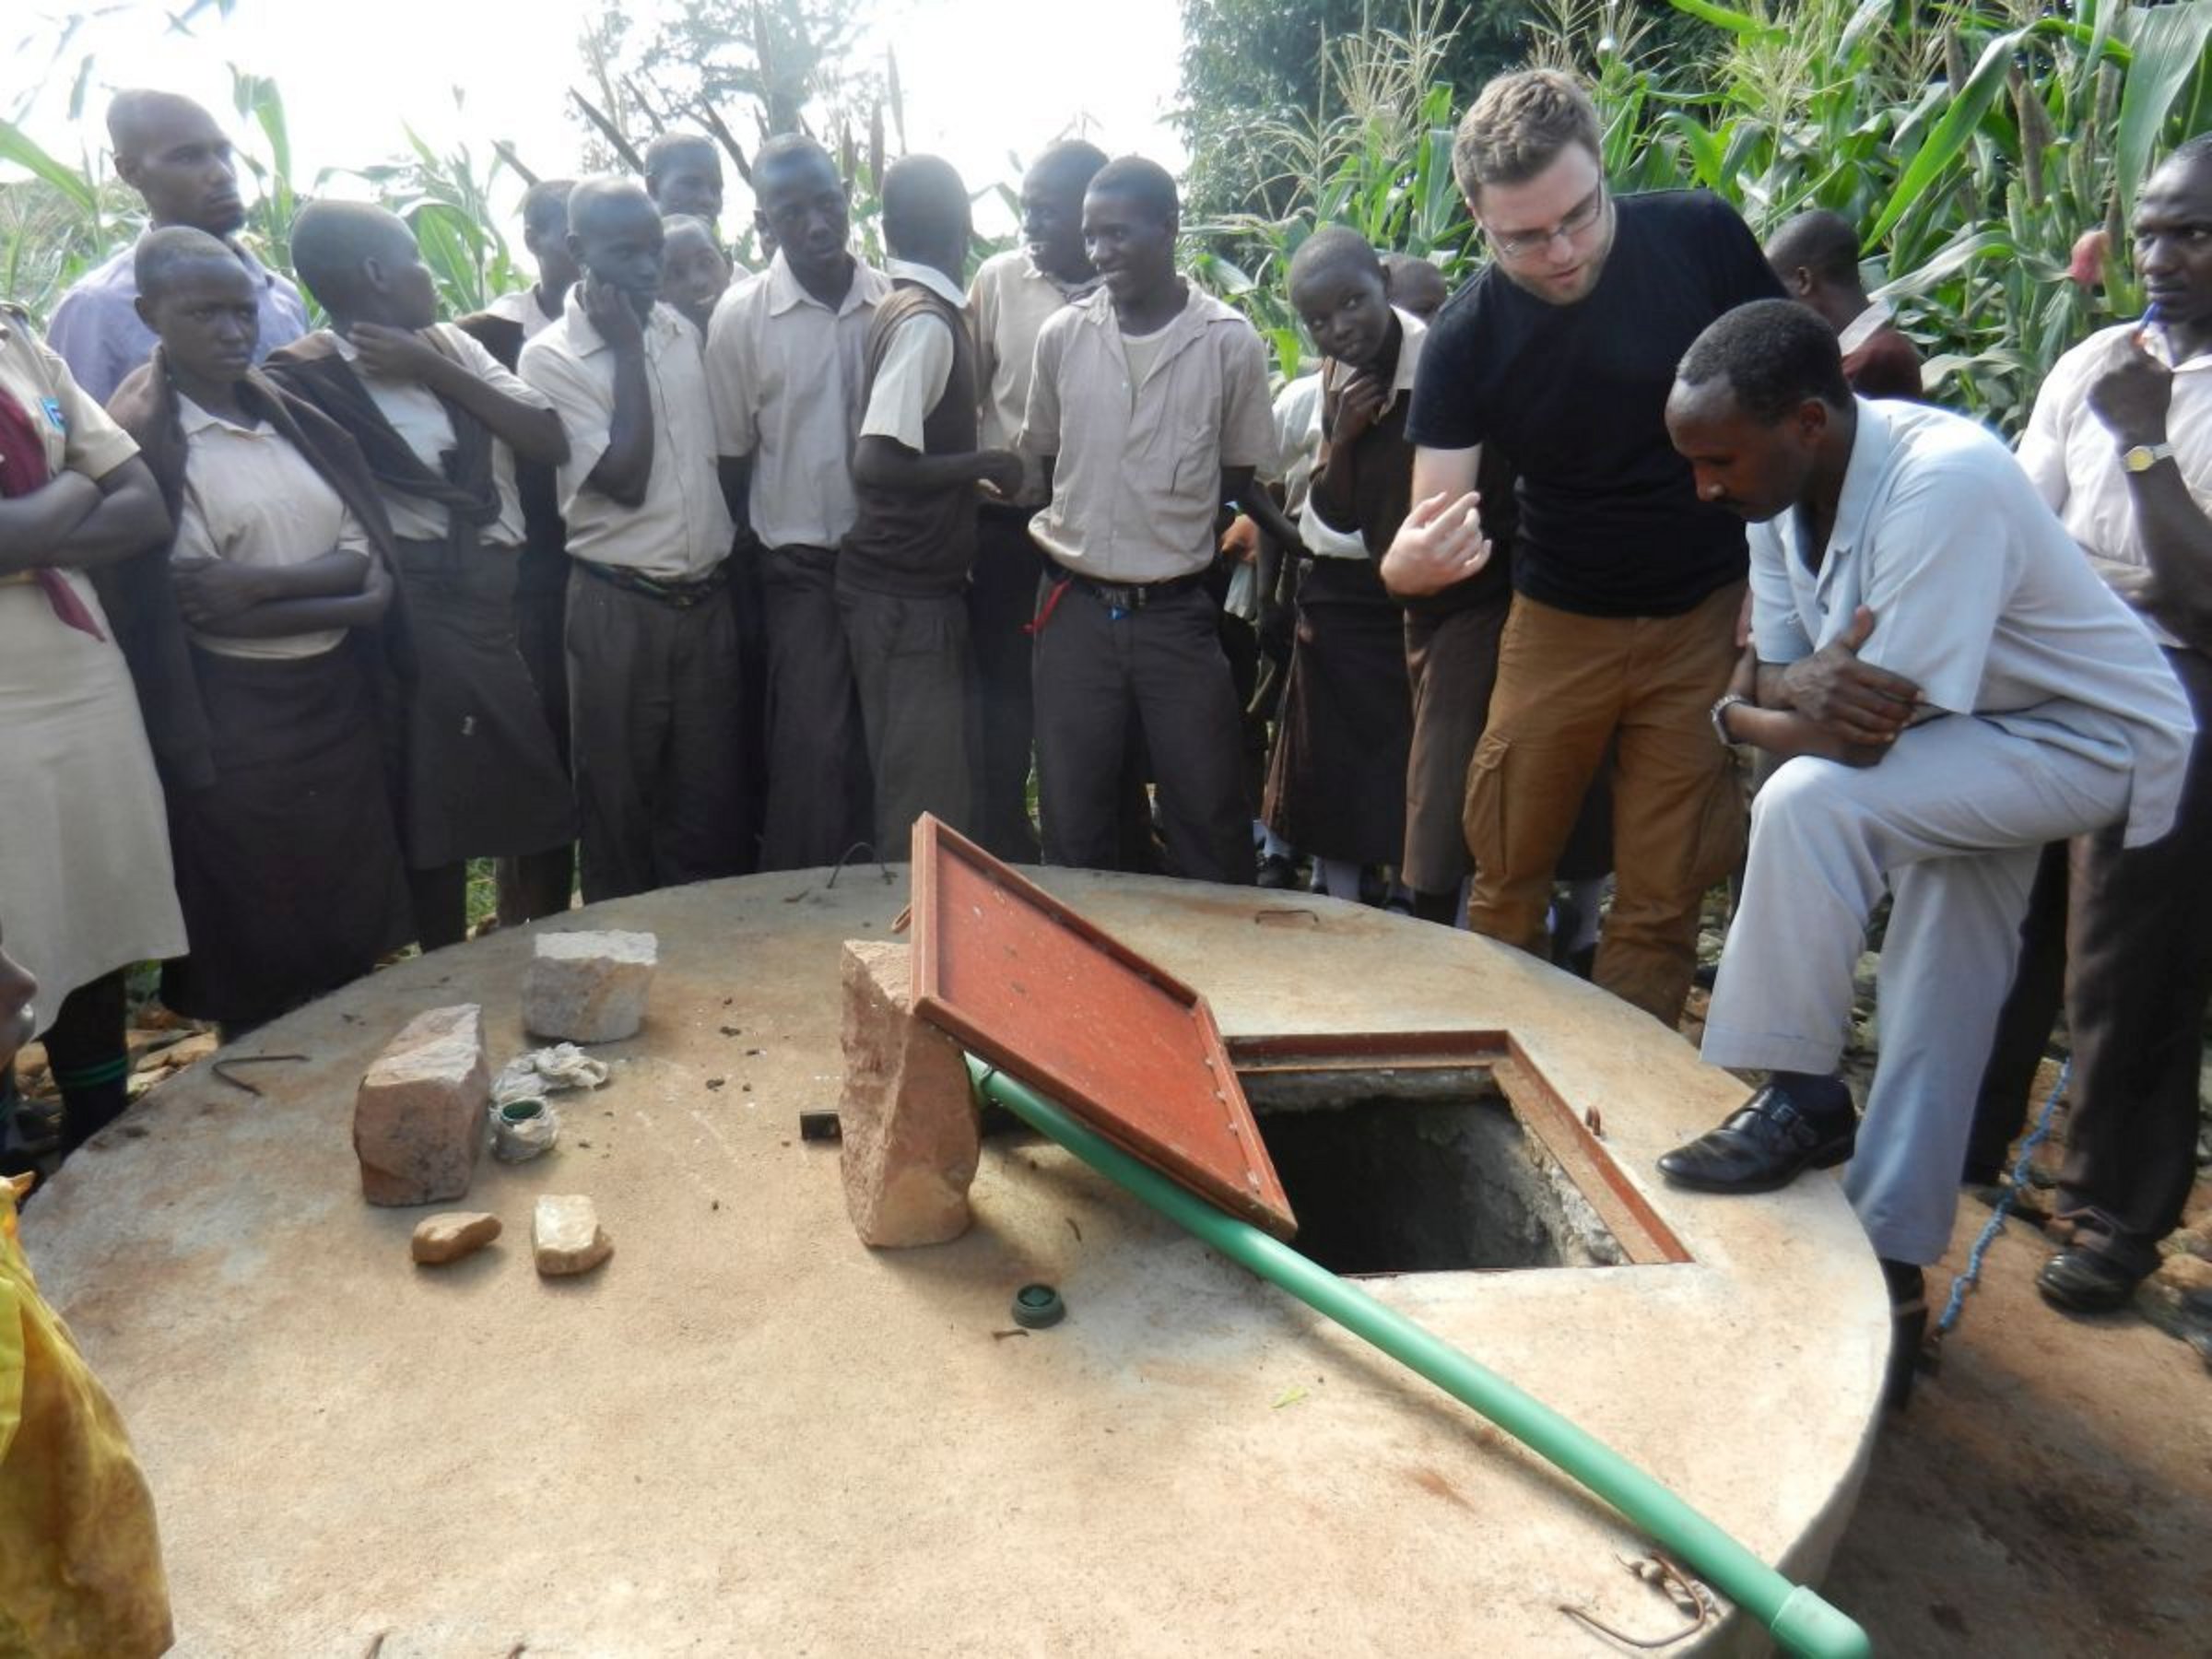 Zugang zu Wasser durch Brunnen in Kenia schaffen